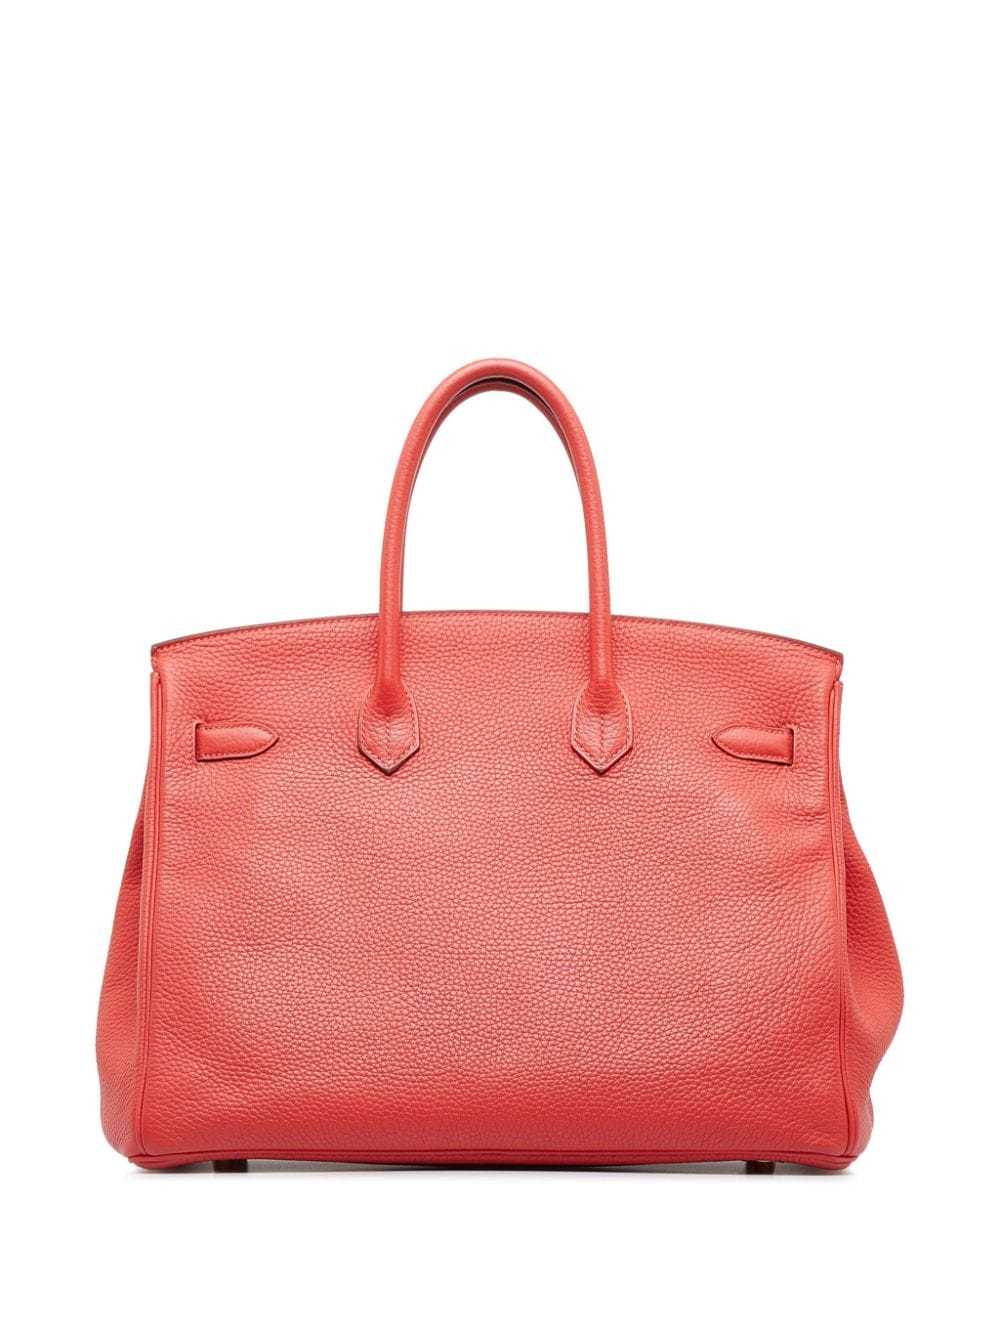 Hermès Pre-Owned 2014 Togo Birkin 35 handbag - Red - image 2